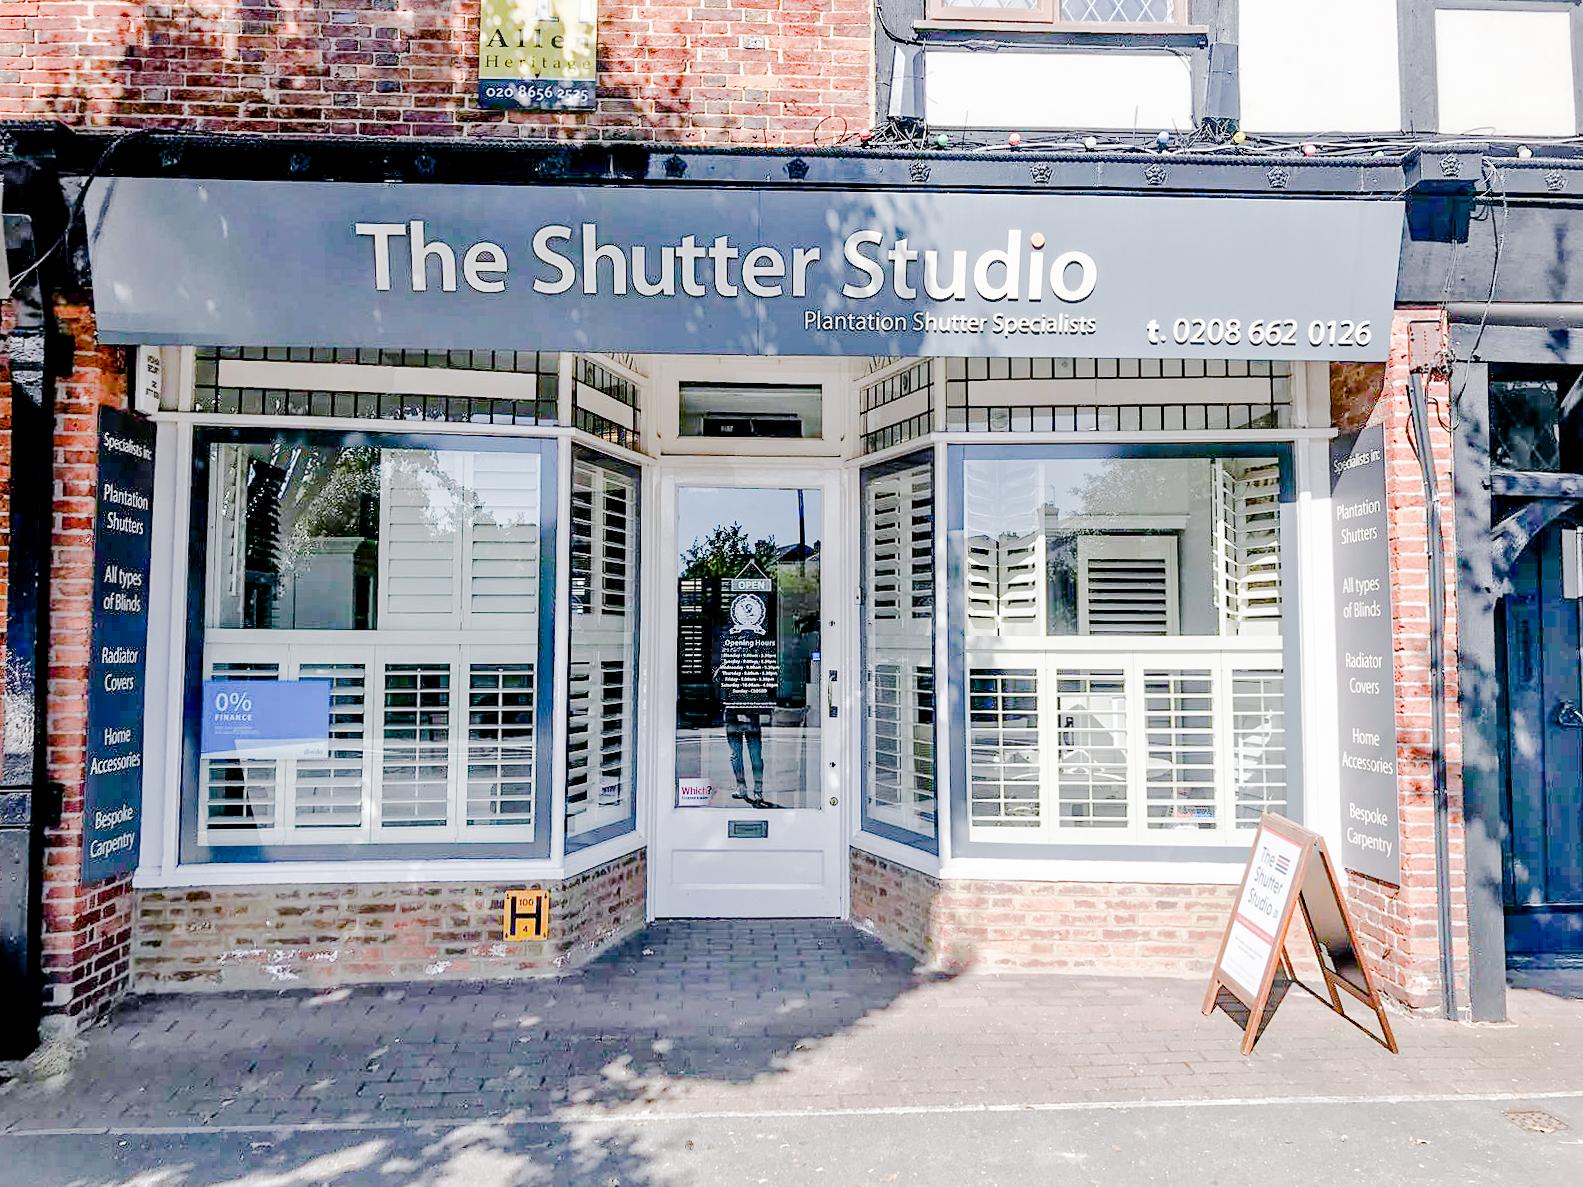 The Shutter Studio Croydon 020 8662 0126